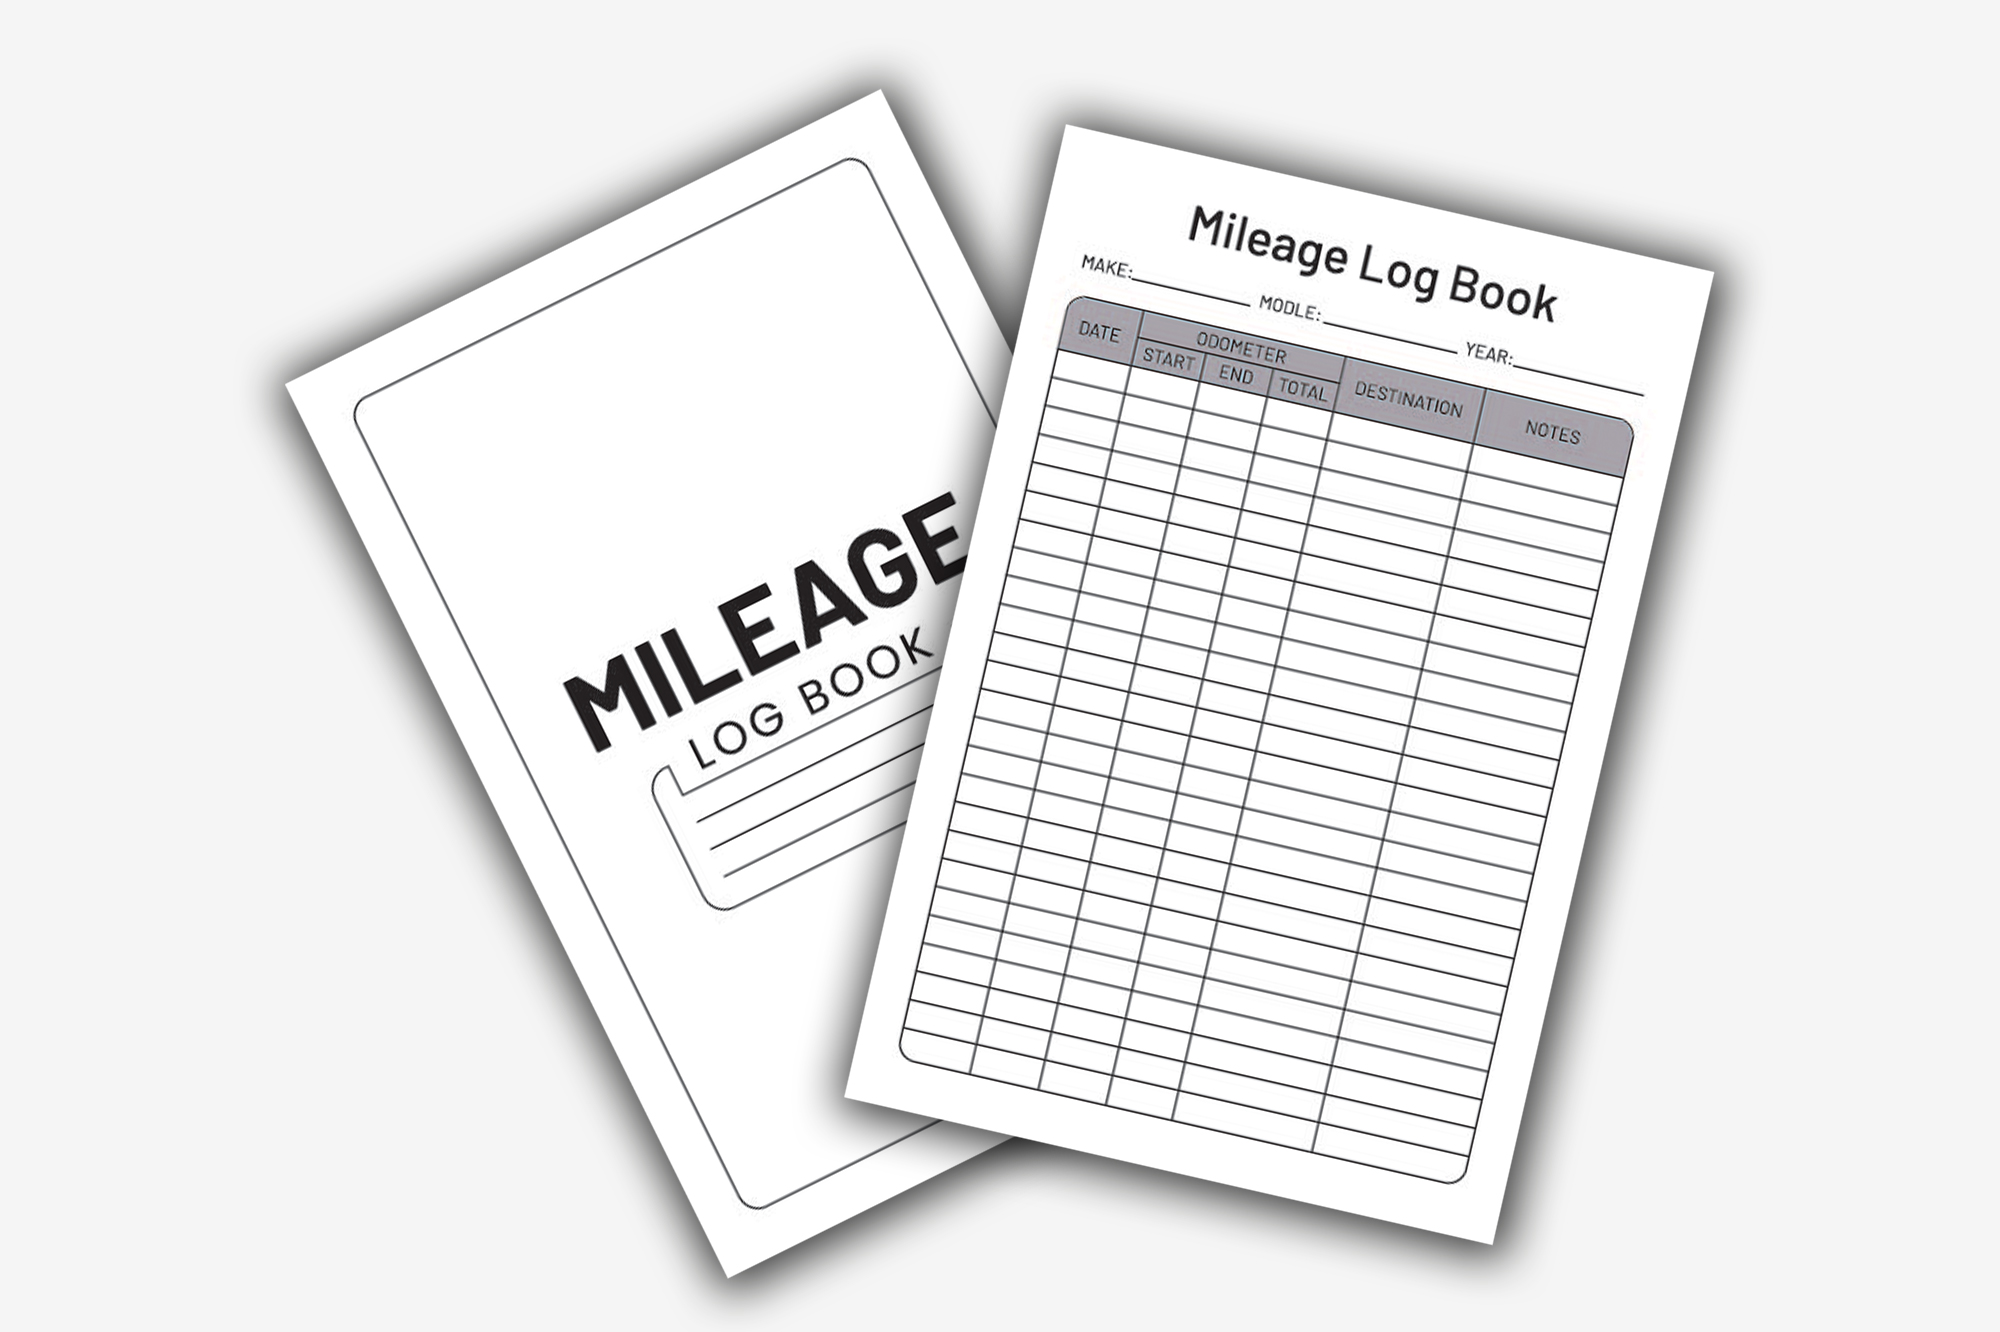 Mileage log book and a mileage log book.